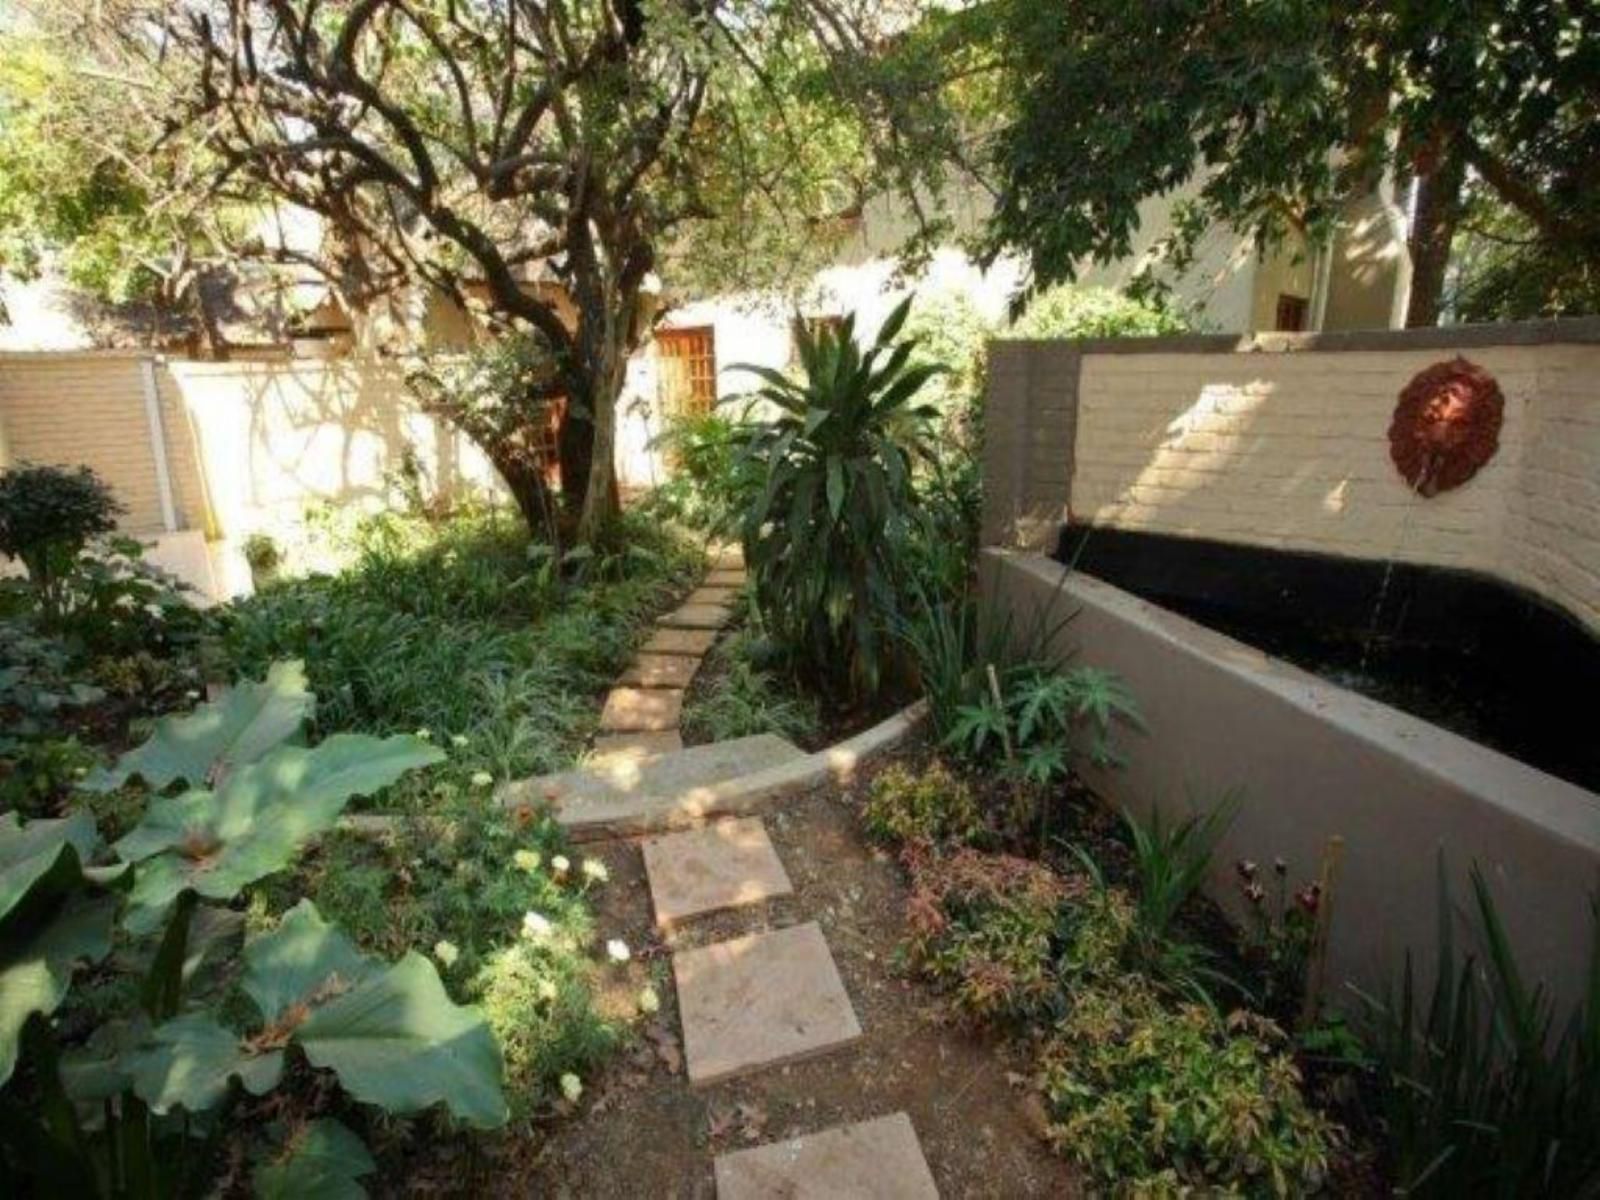 Monchique Guest House And Conference Centre Muldersdrift Gauteng South Africa House, Building, Architecture, Plant, Nature, Garden